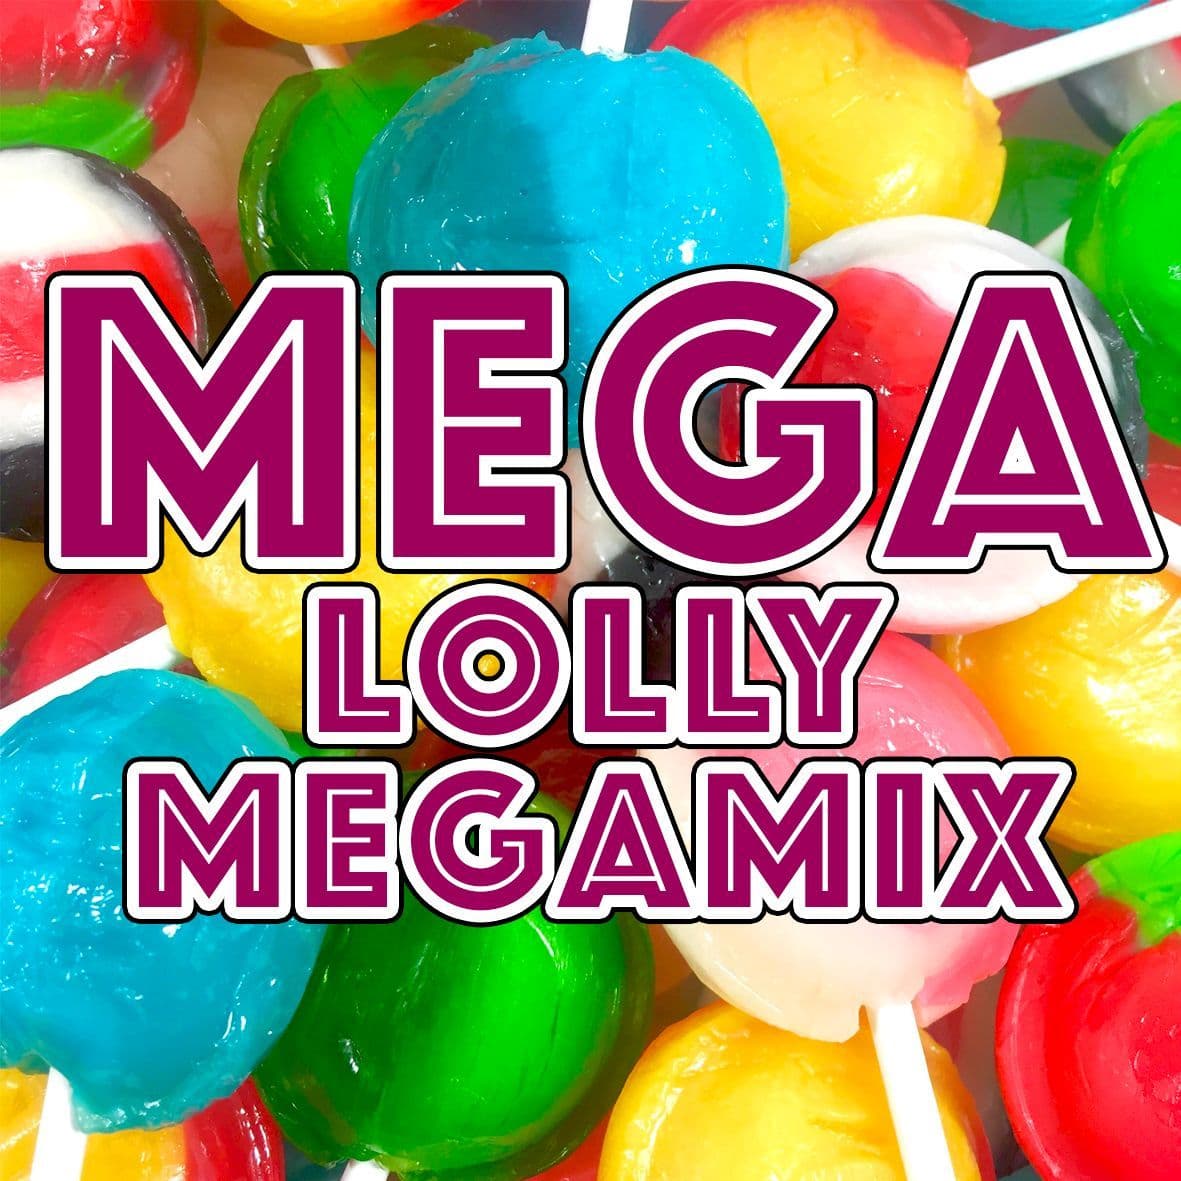 MEGA LOLLY Mega Mix